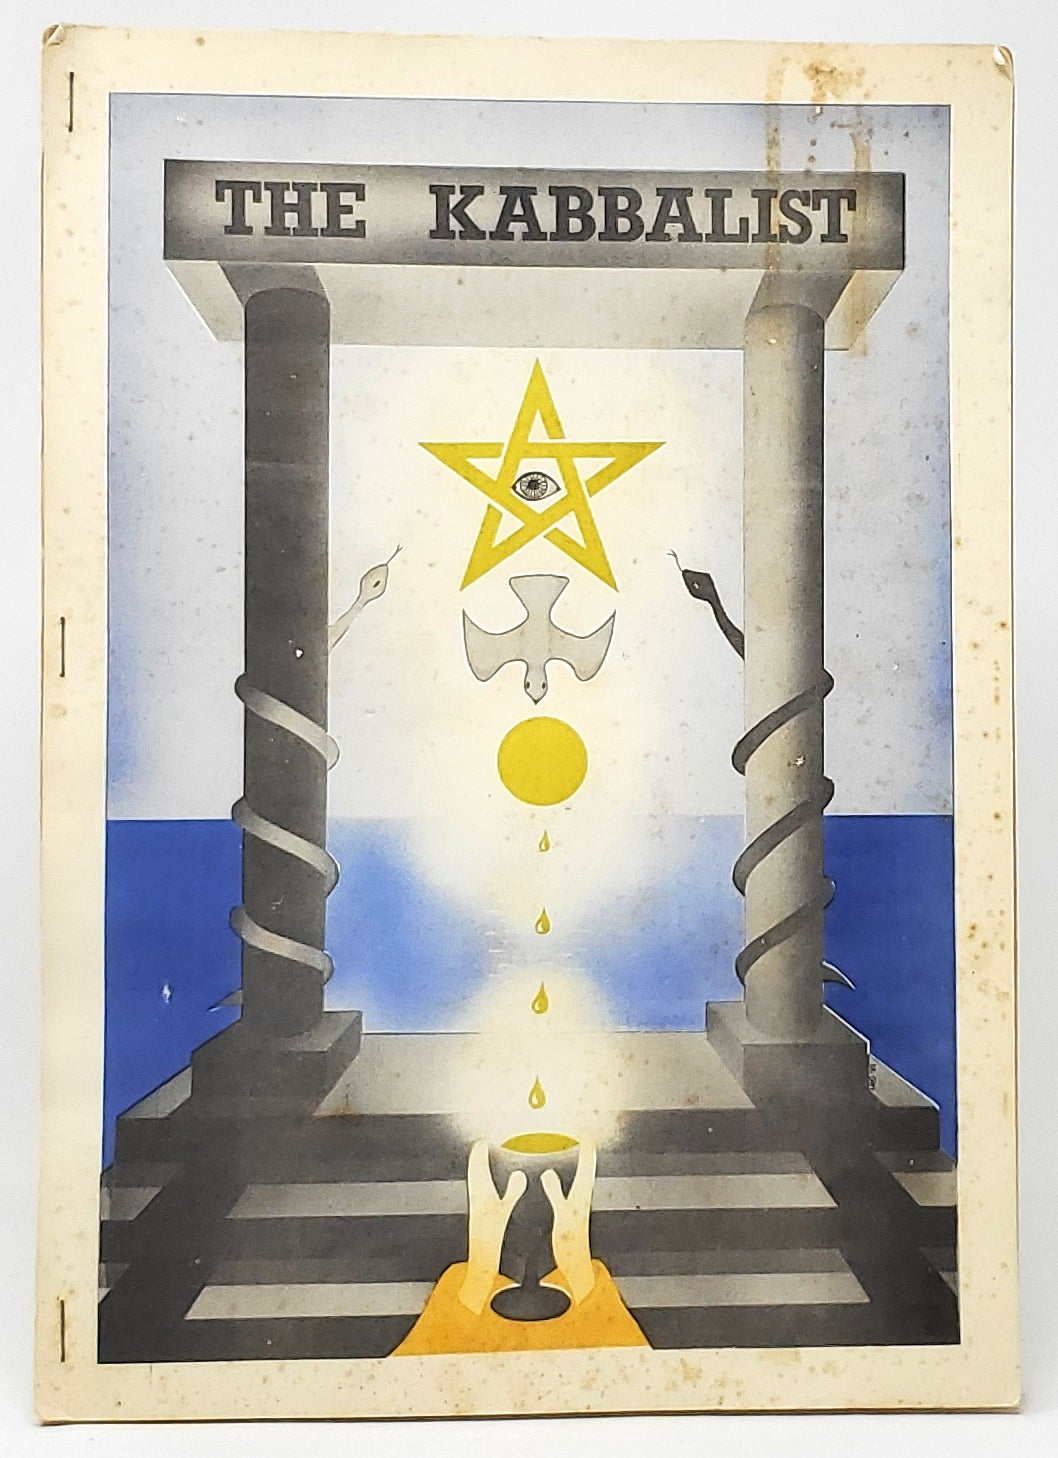 The Kabbalist Vol. 4 No. 6